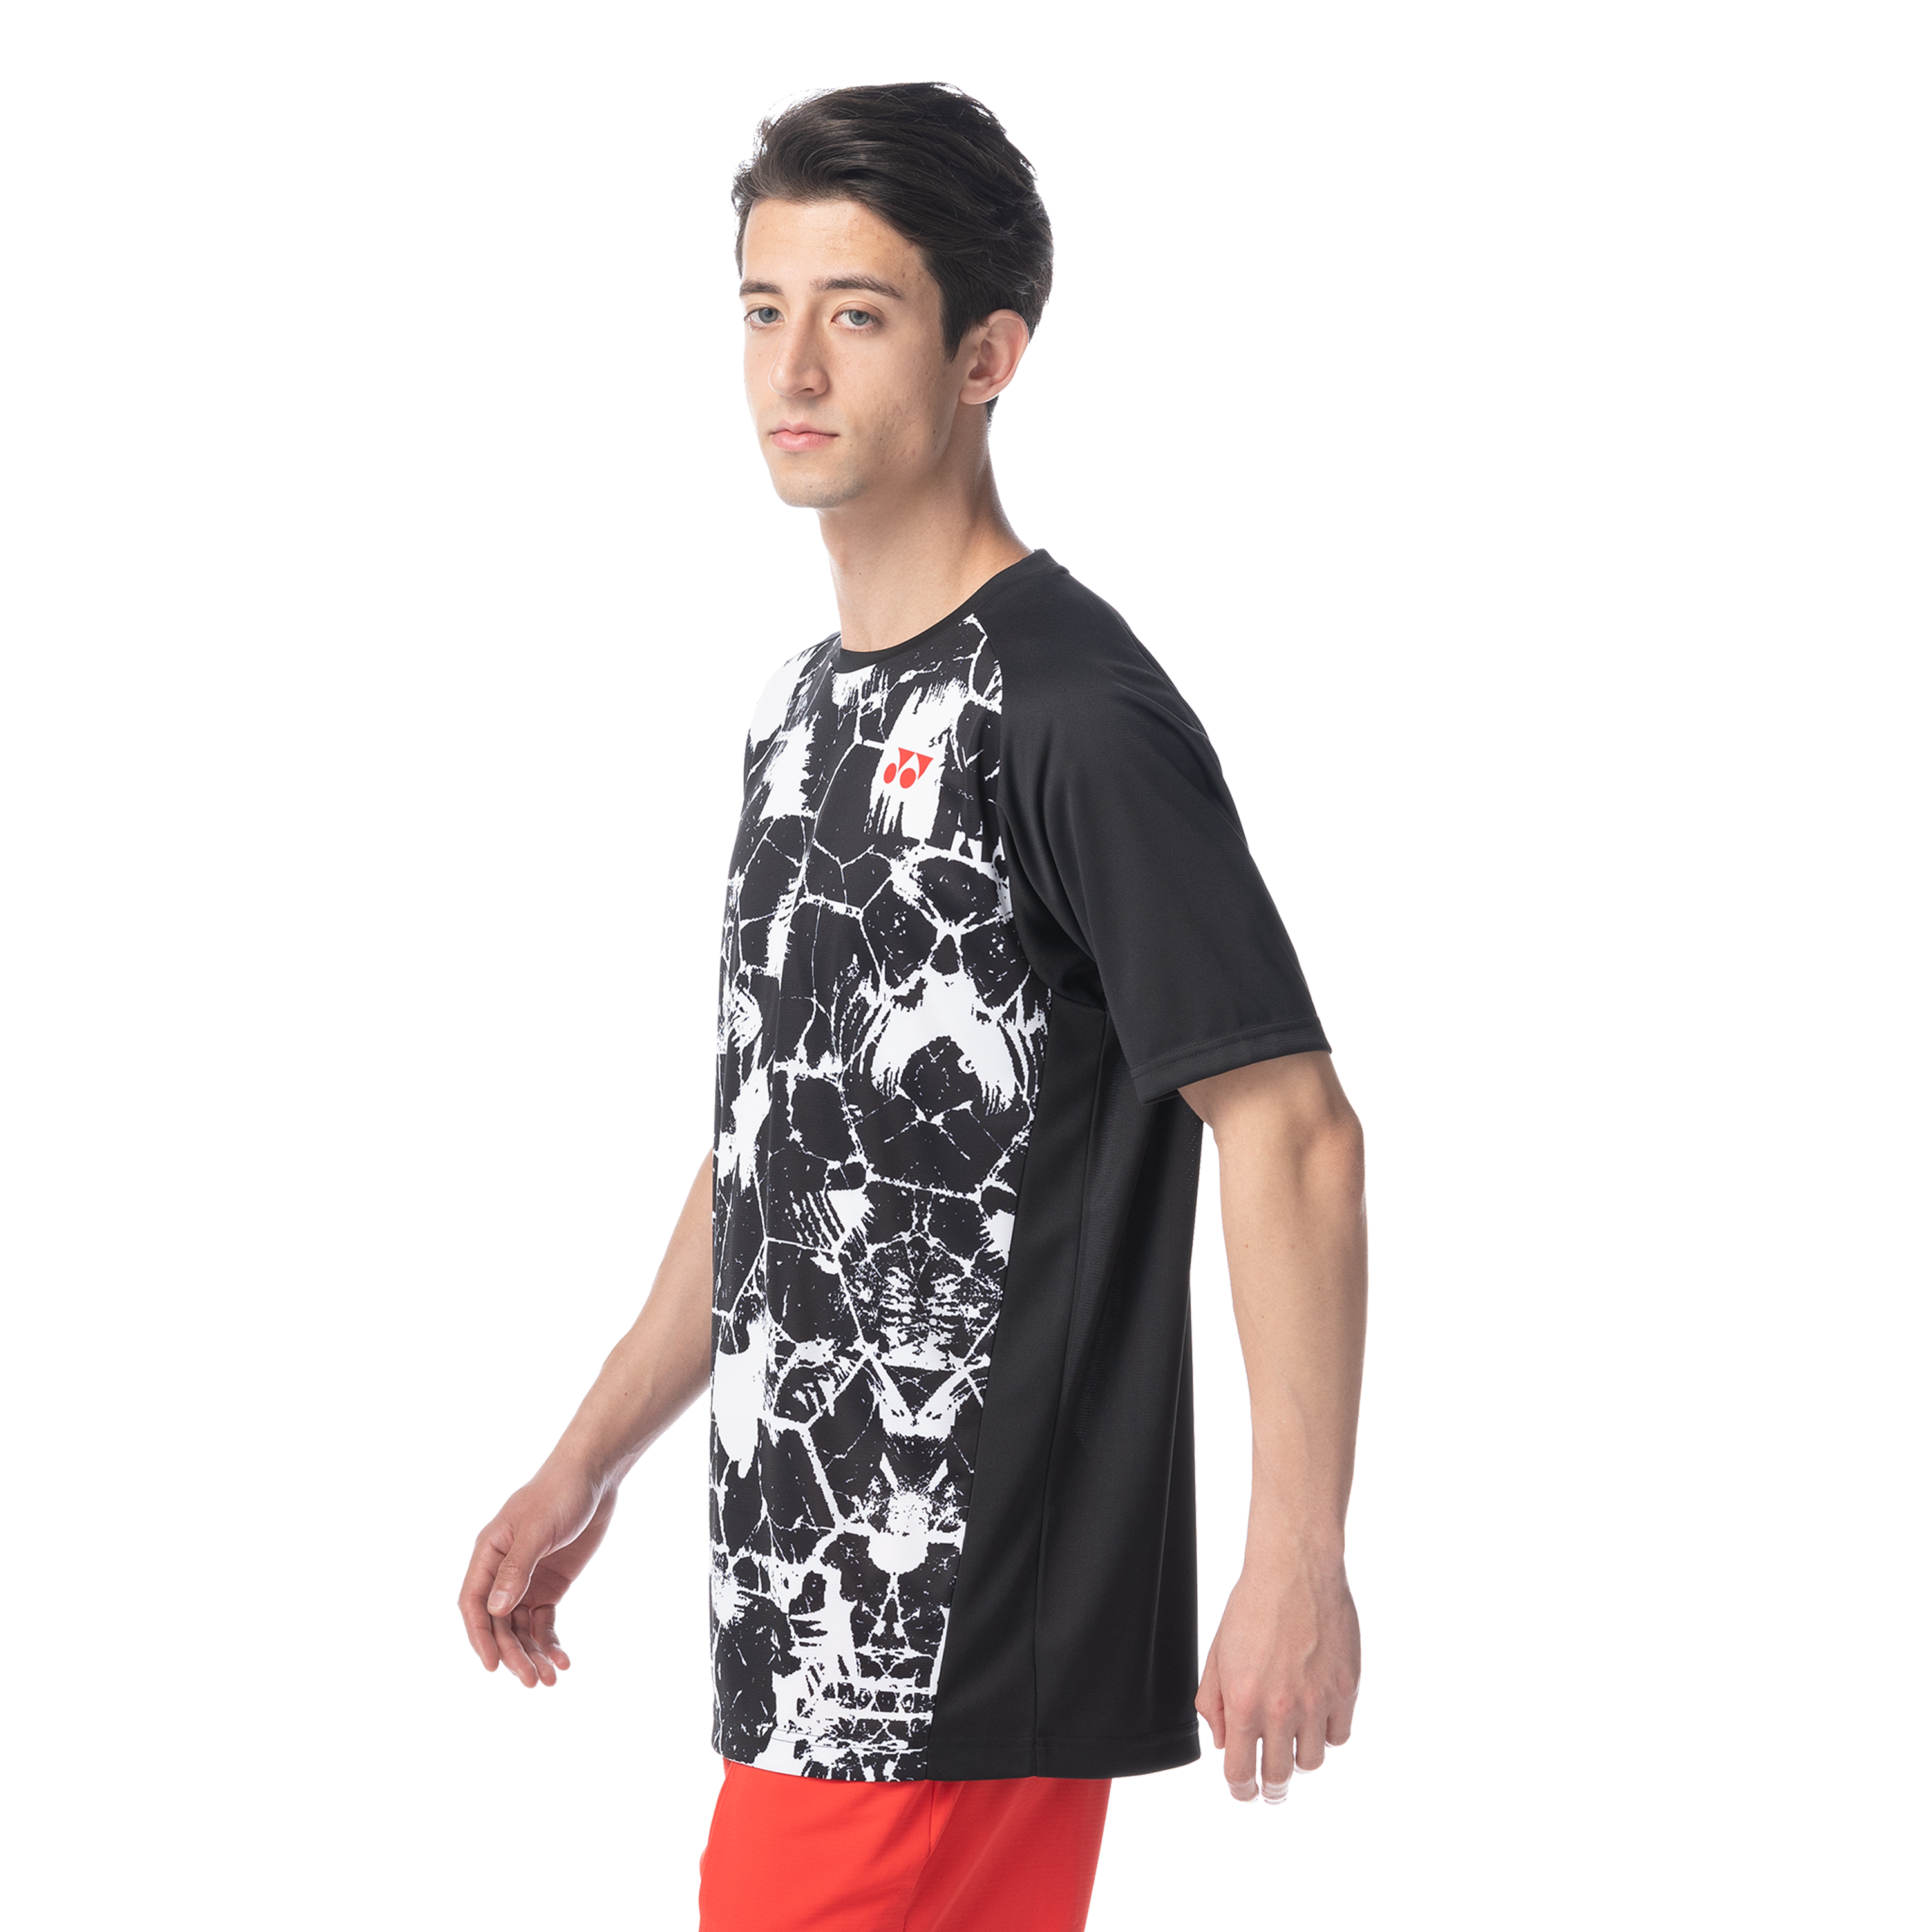 Yonex Badminton/ Tennis Sports Shirt 16635EX Black MEN'S